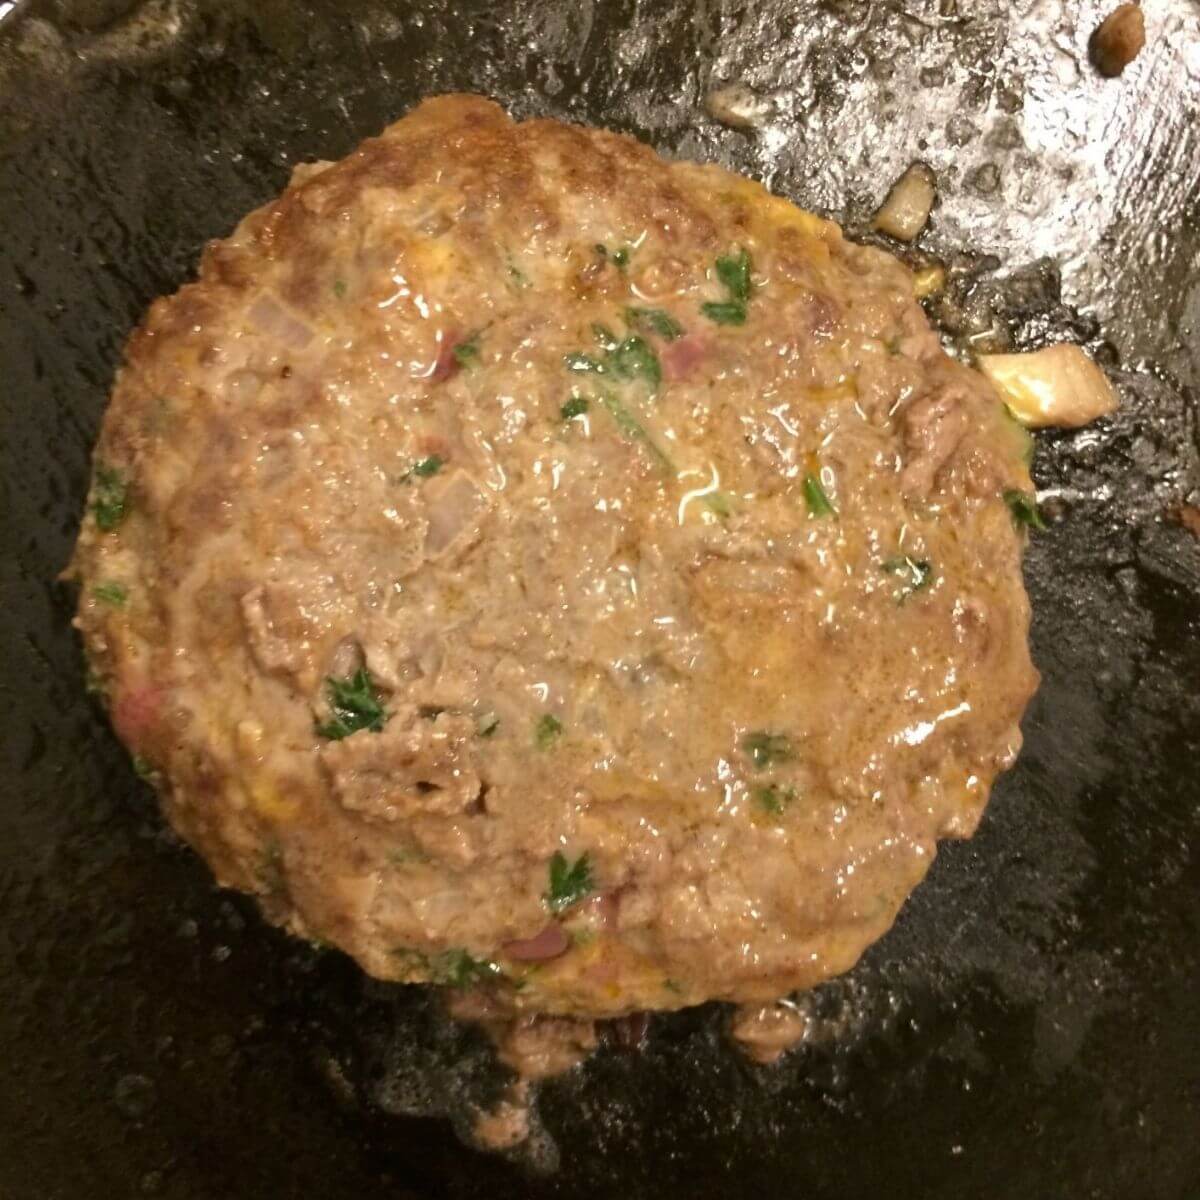 cooked hamburger patty